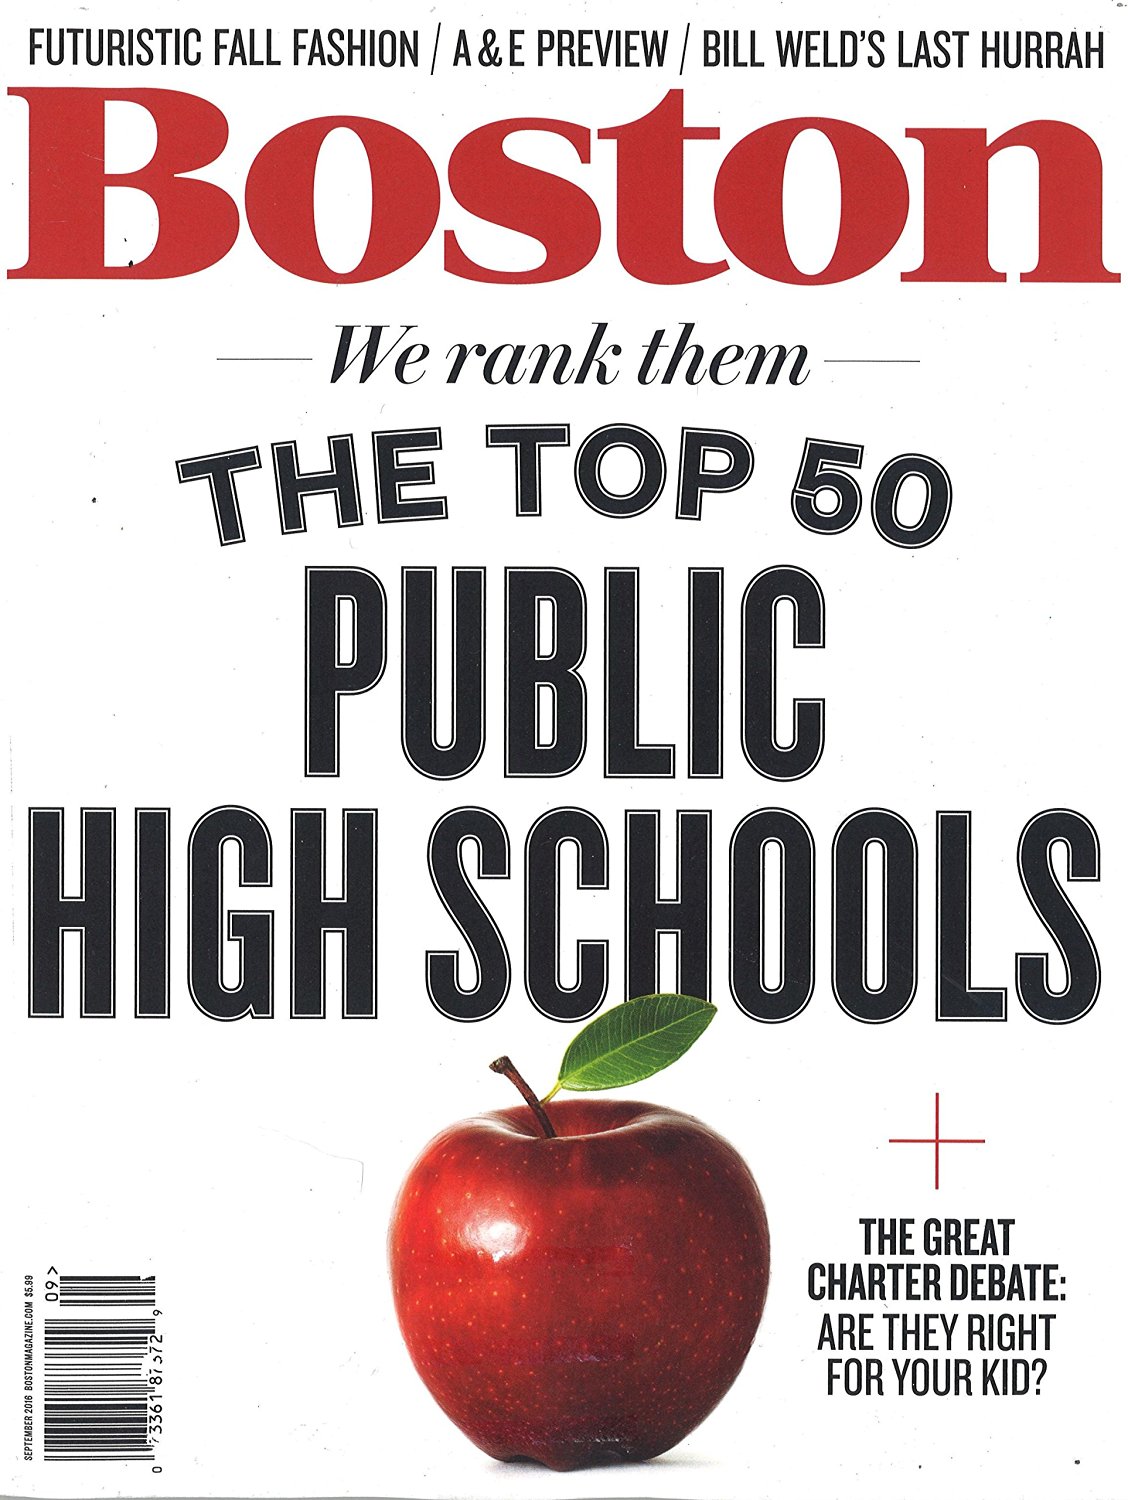 Boston Magazine TopMags